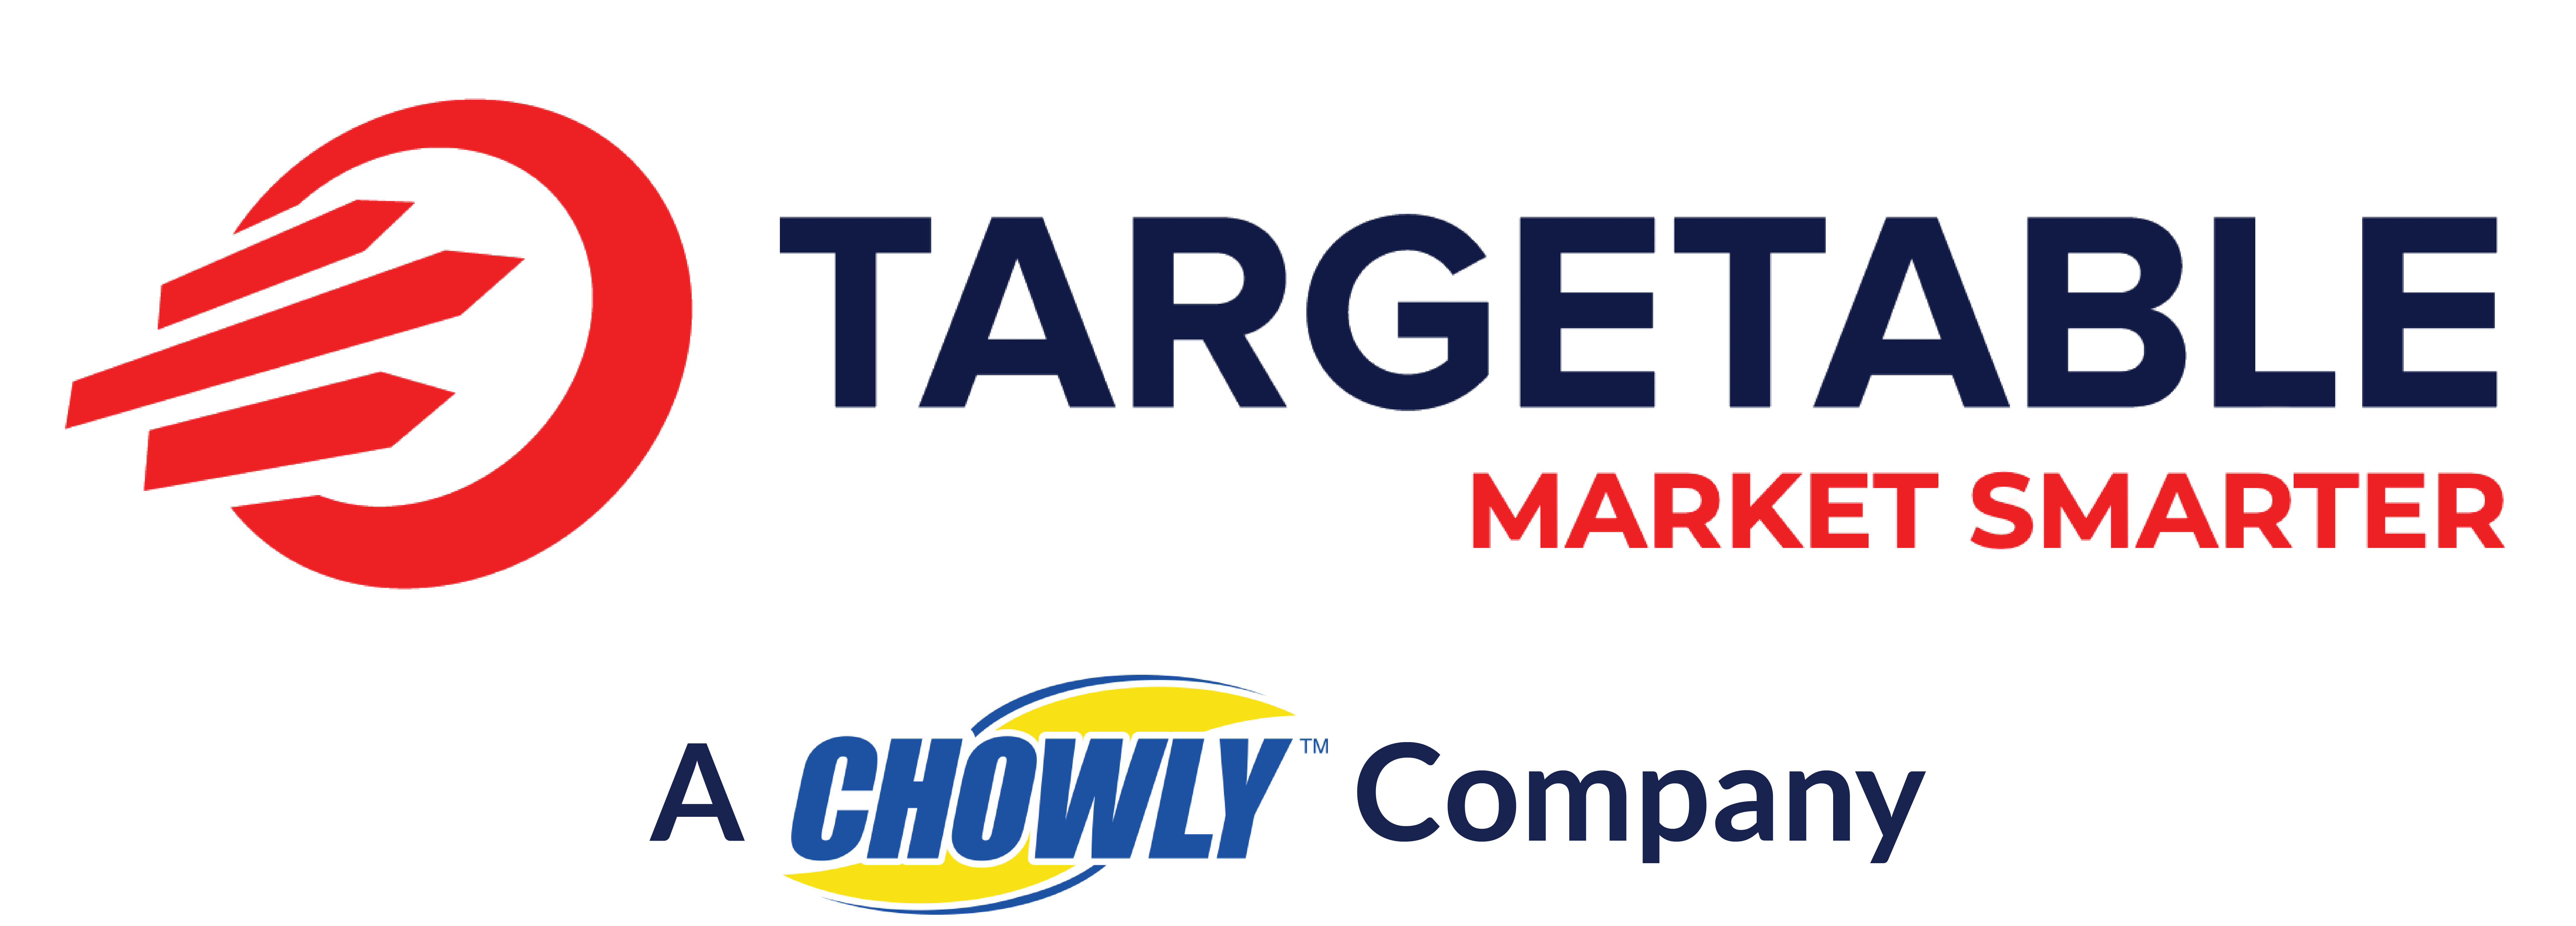 A Chowly Company Logo - Targetable - 300ppi-1